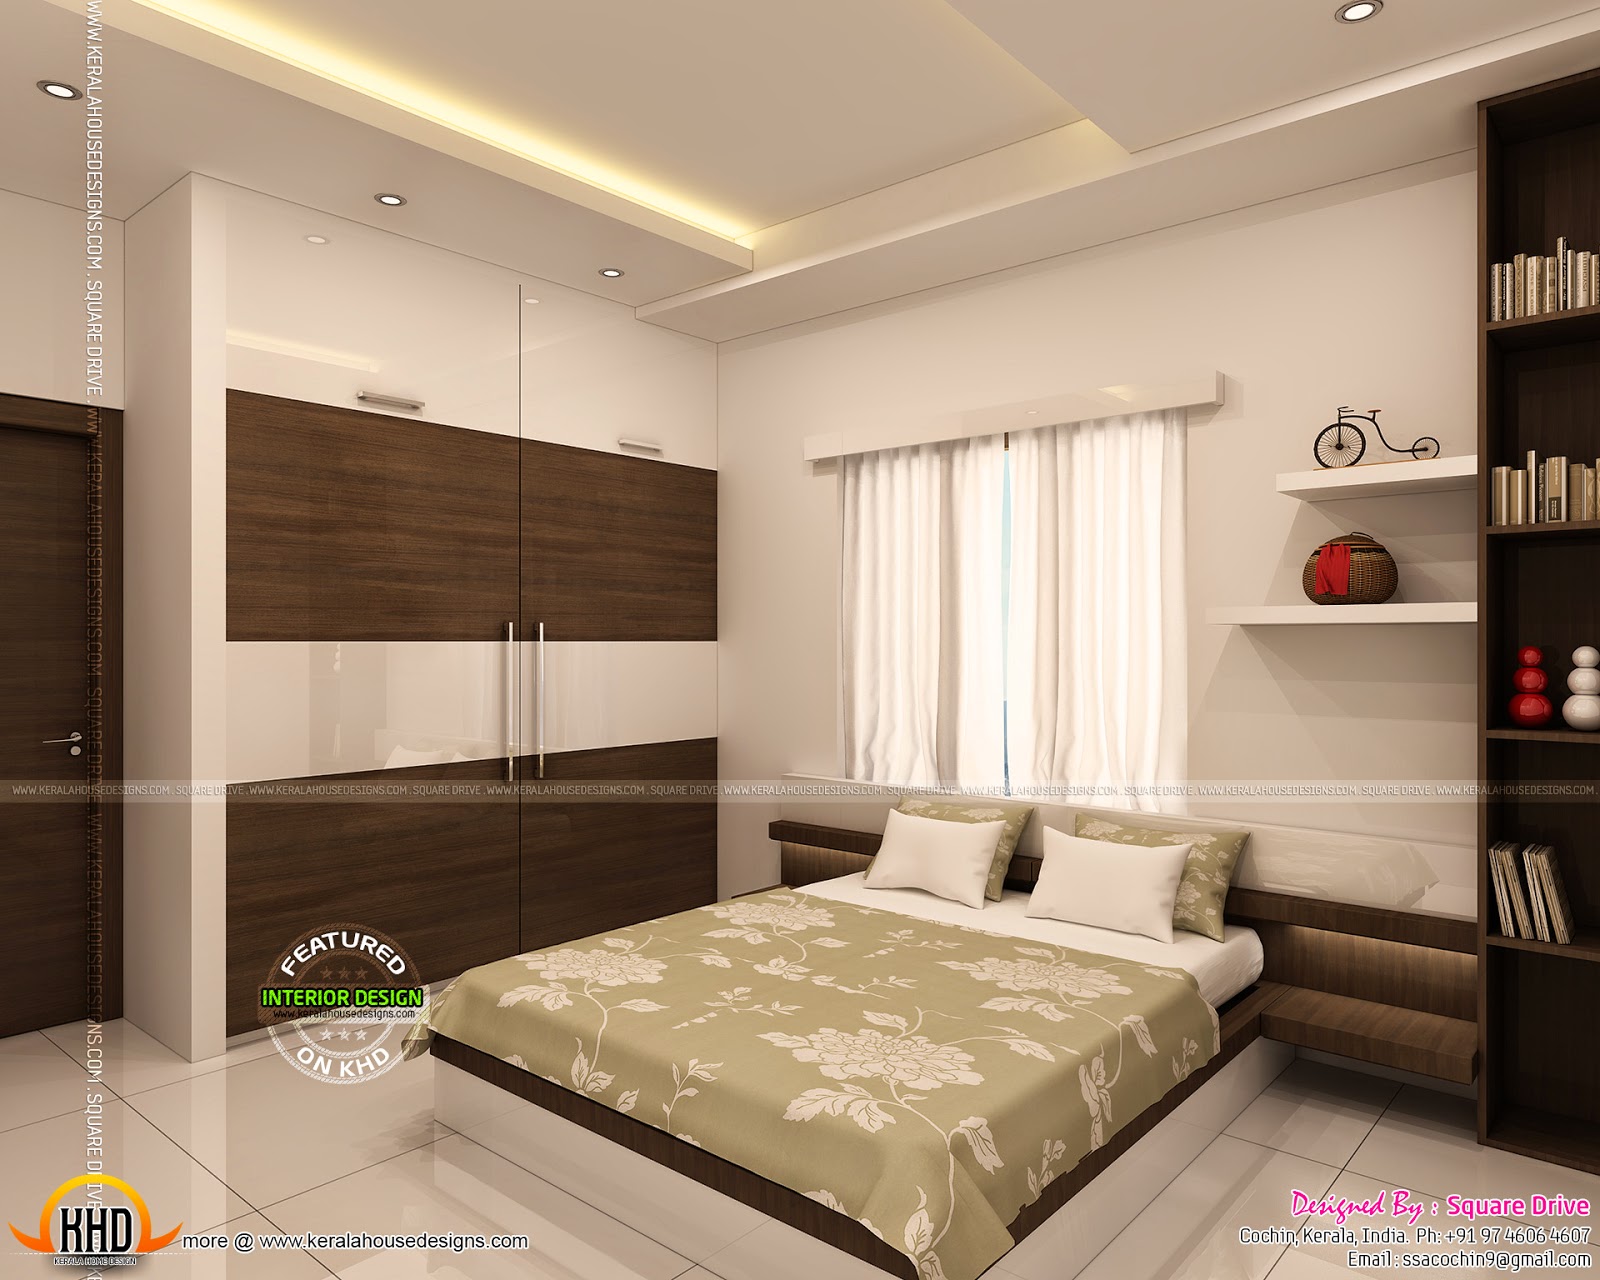 Bedroom interior designs - Kerala home design and floor plans